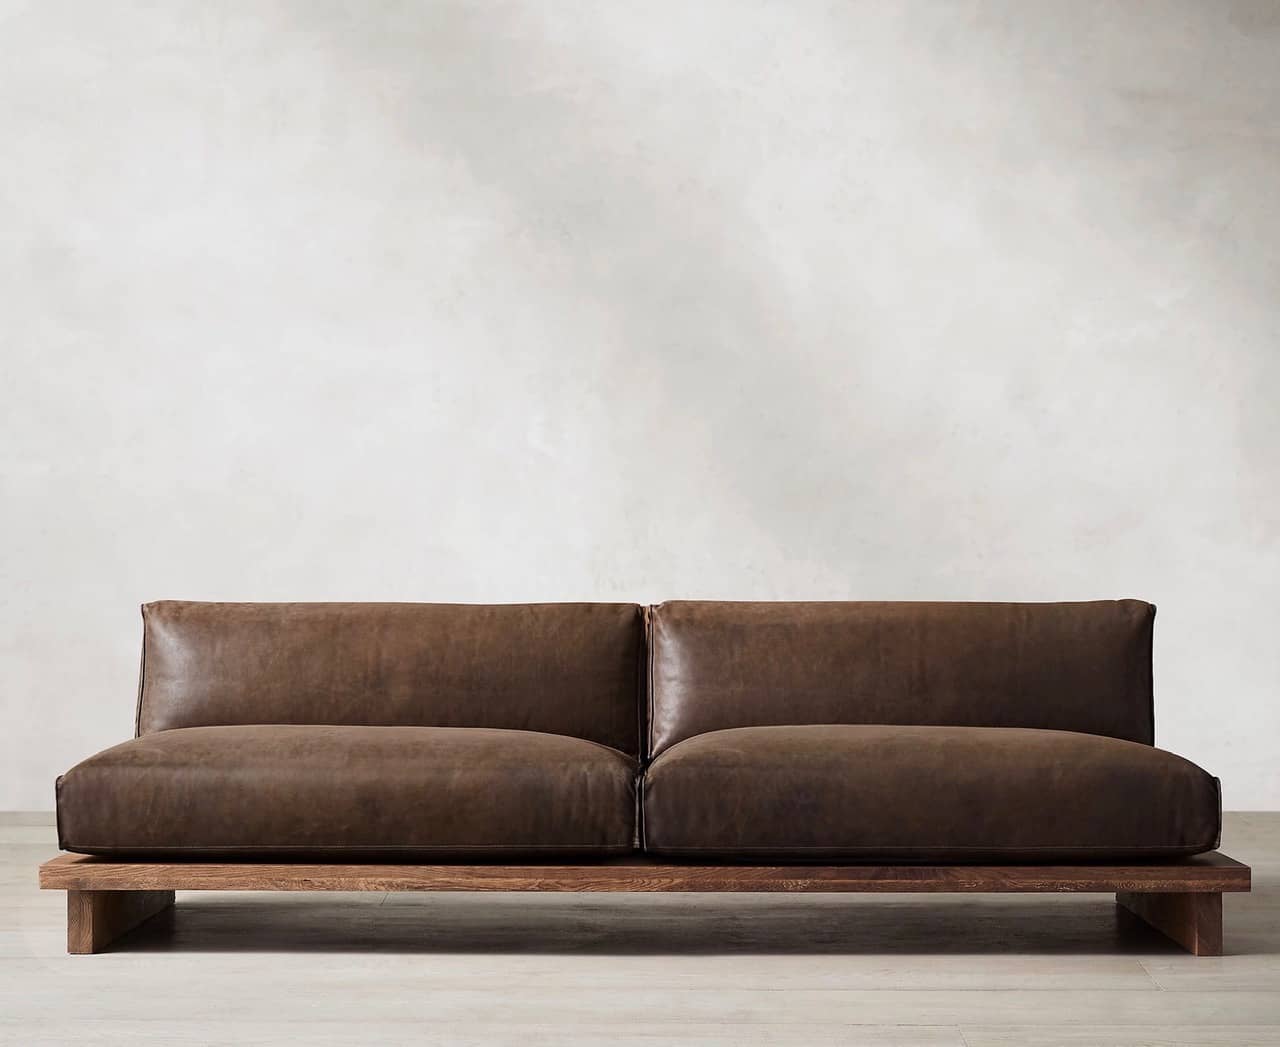 Made to Order Furniture. - Sofa 065-01